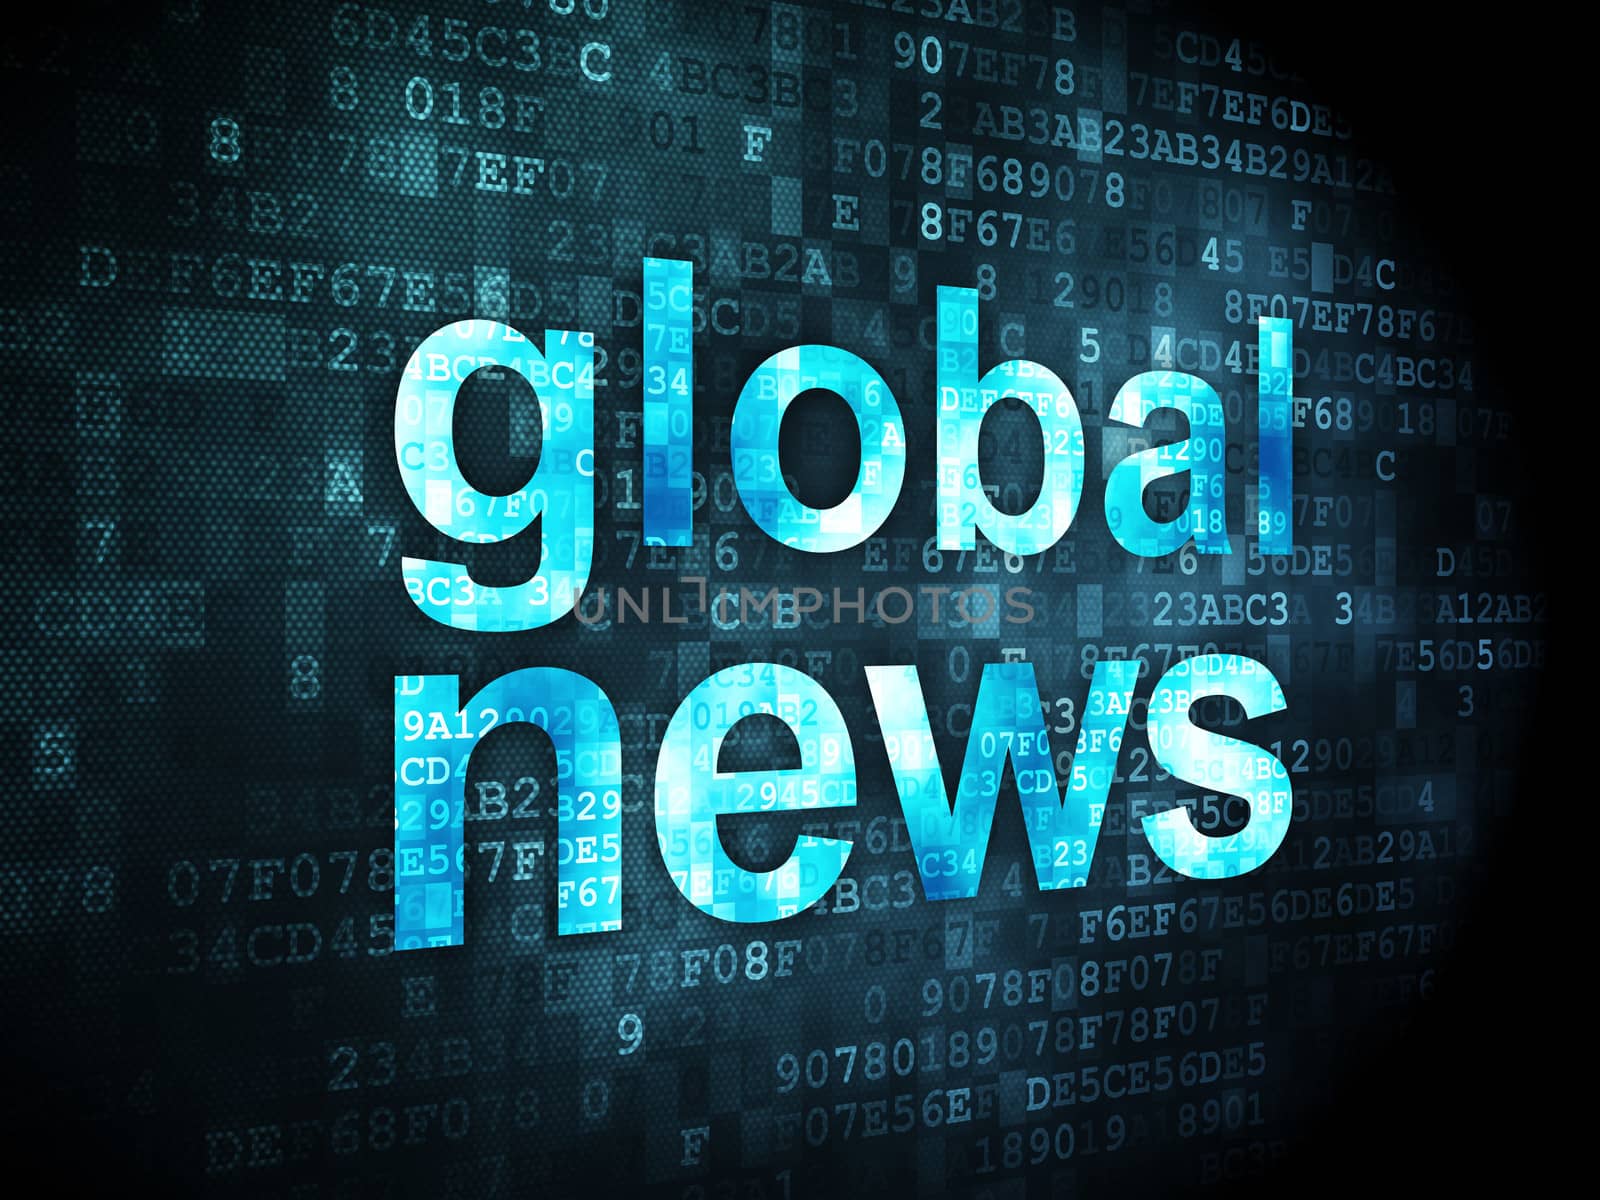 News concept: pixelated words Global News on digital background, 3d render